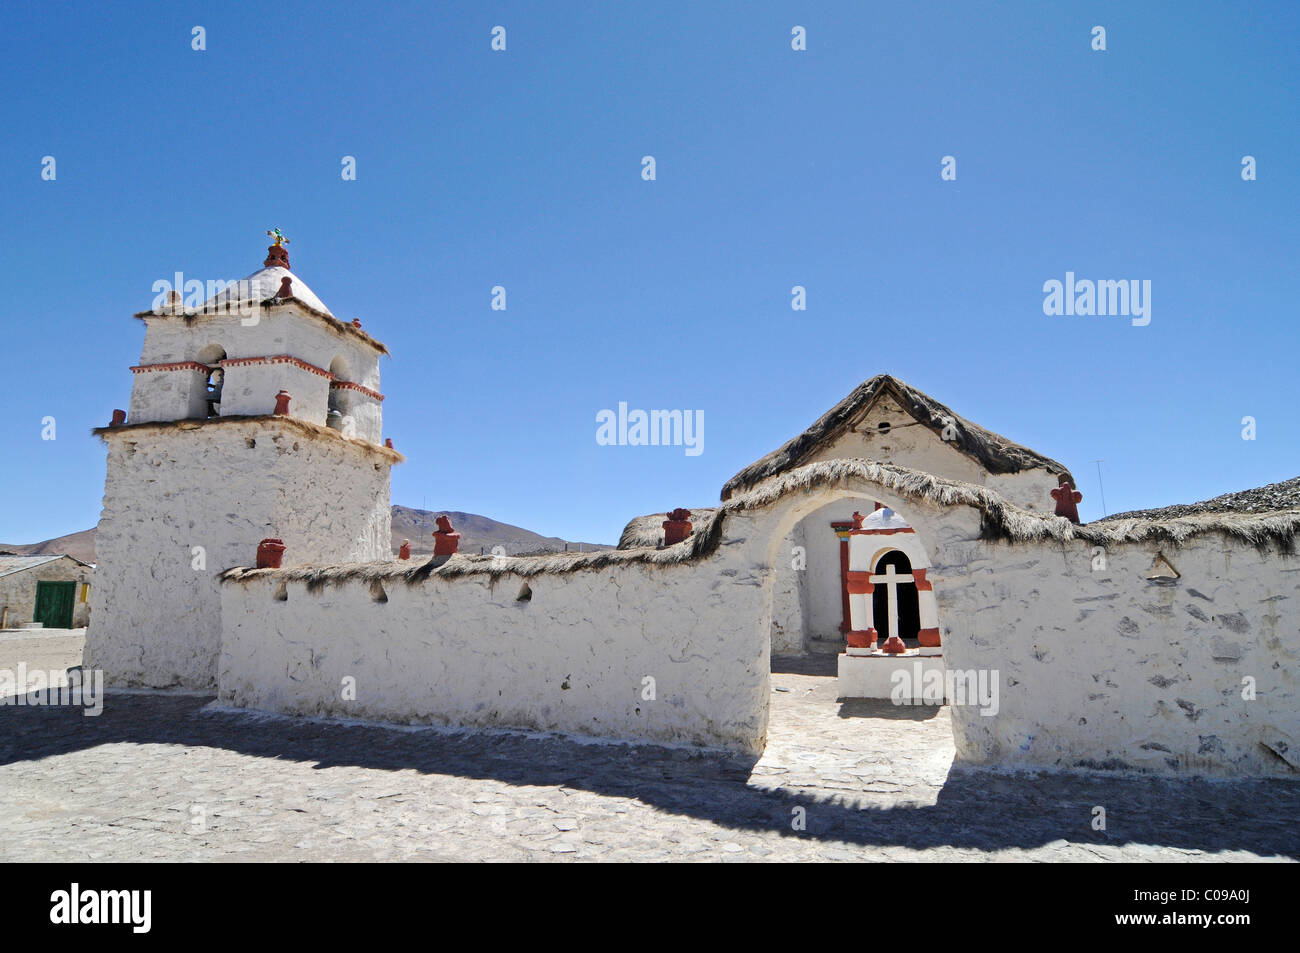 Kirche, gebaut mit Adobe Bau Methoden, Parinacota, Bergdorf, Lauca Nationalpark, Altiplano, Norte Grande Stockfoto